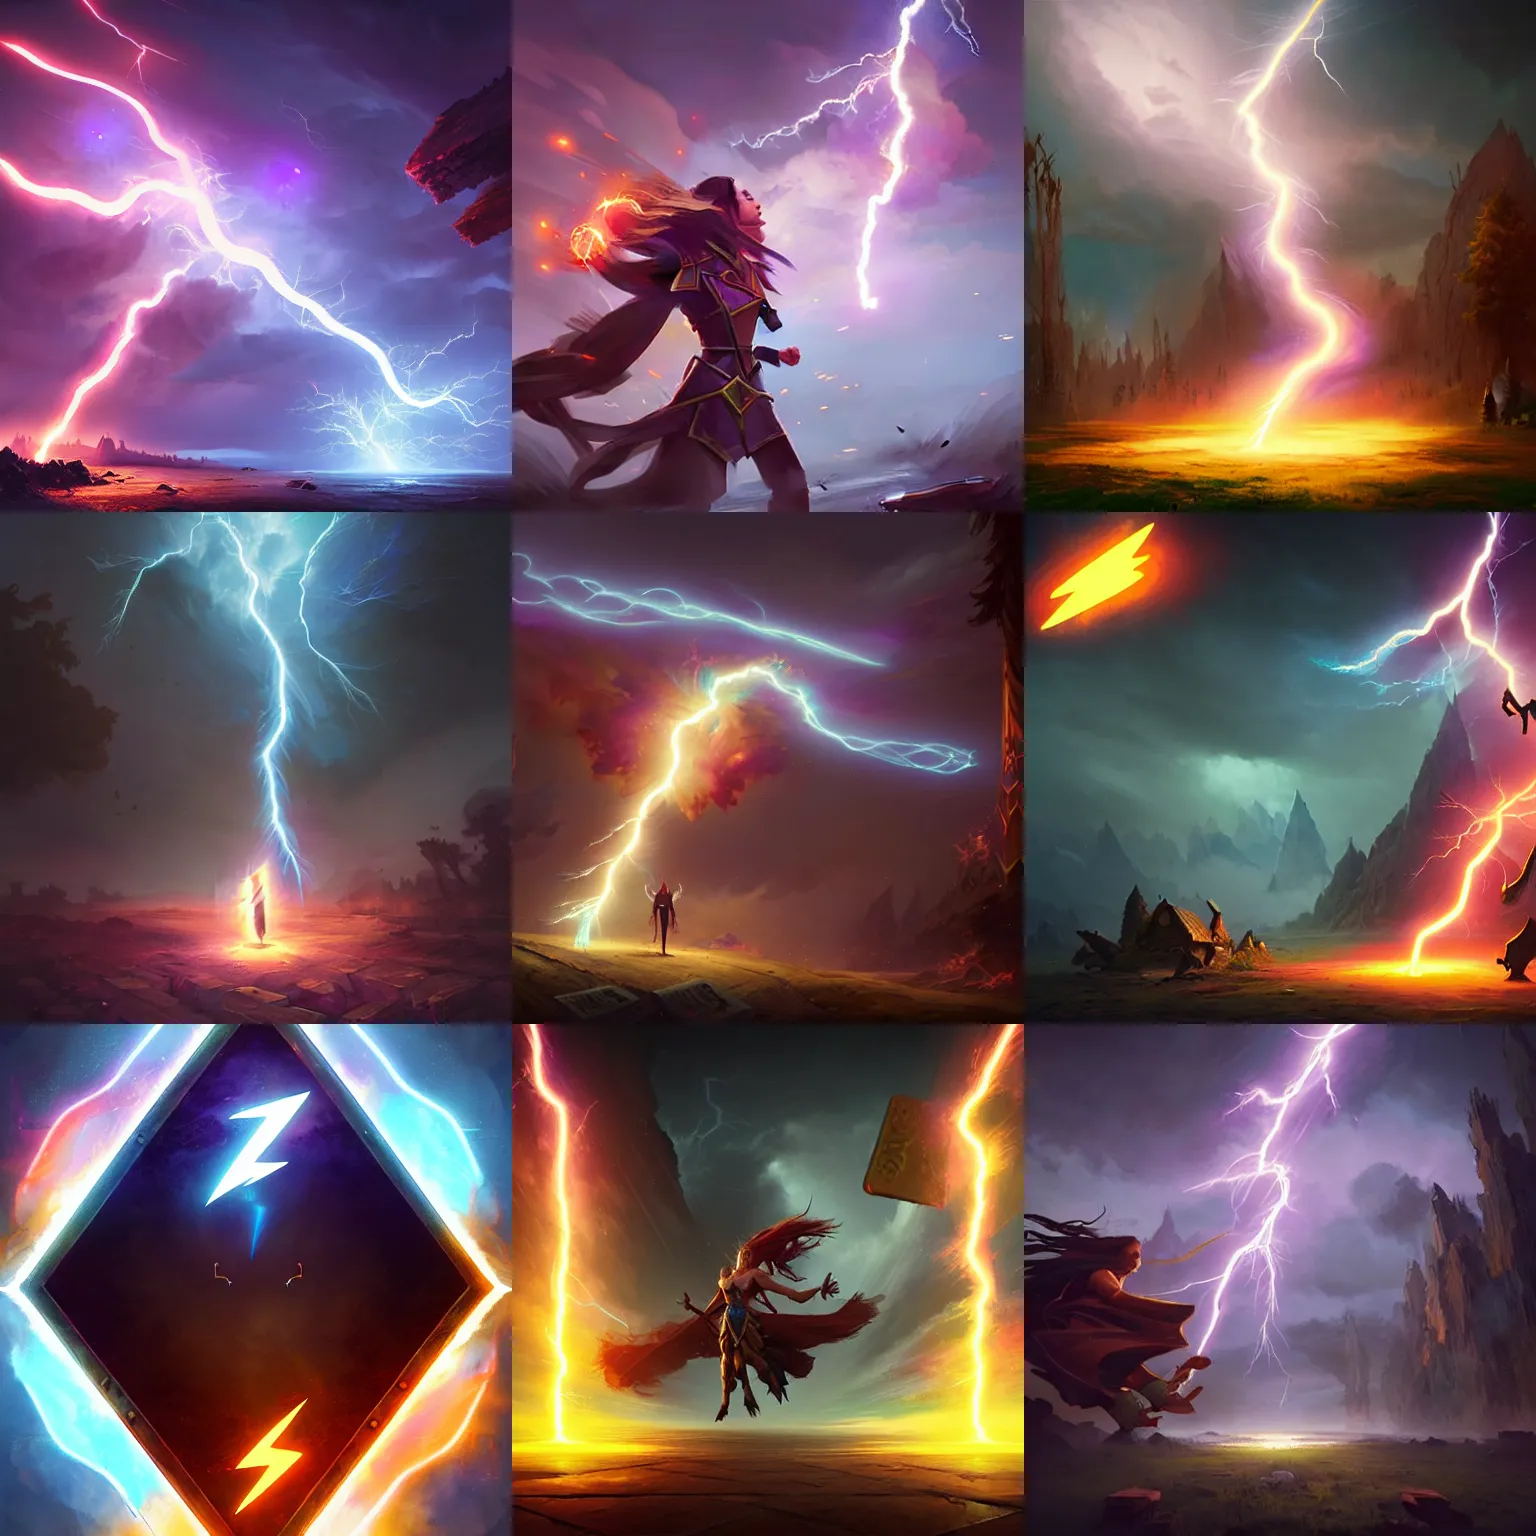 Prompt: lightning strike magic spell vfx, diagonal, full canvas, hearthstone colour style, fantasy game spell icon, fantasy epic digital art, by greg rutkowski